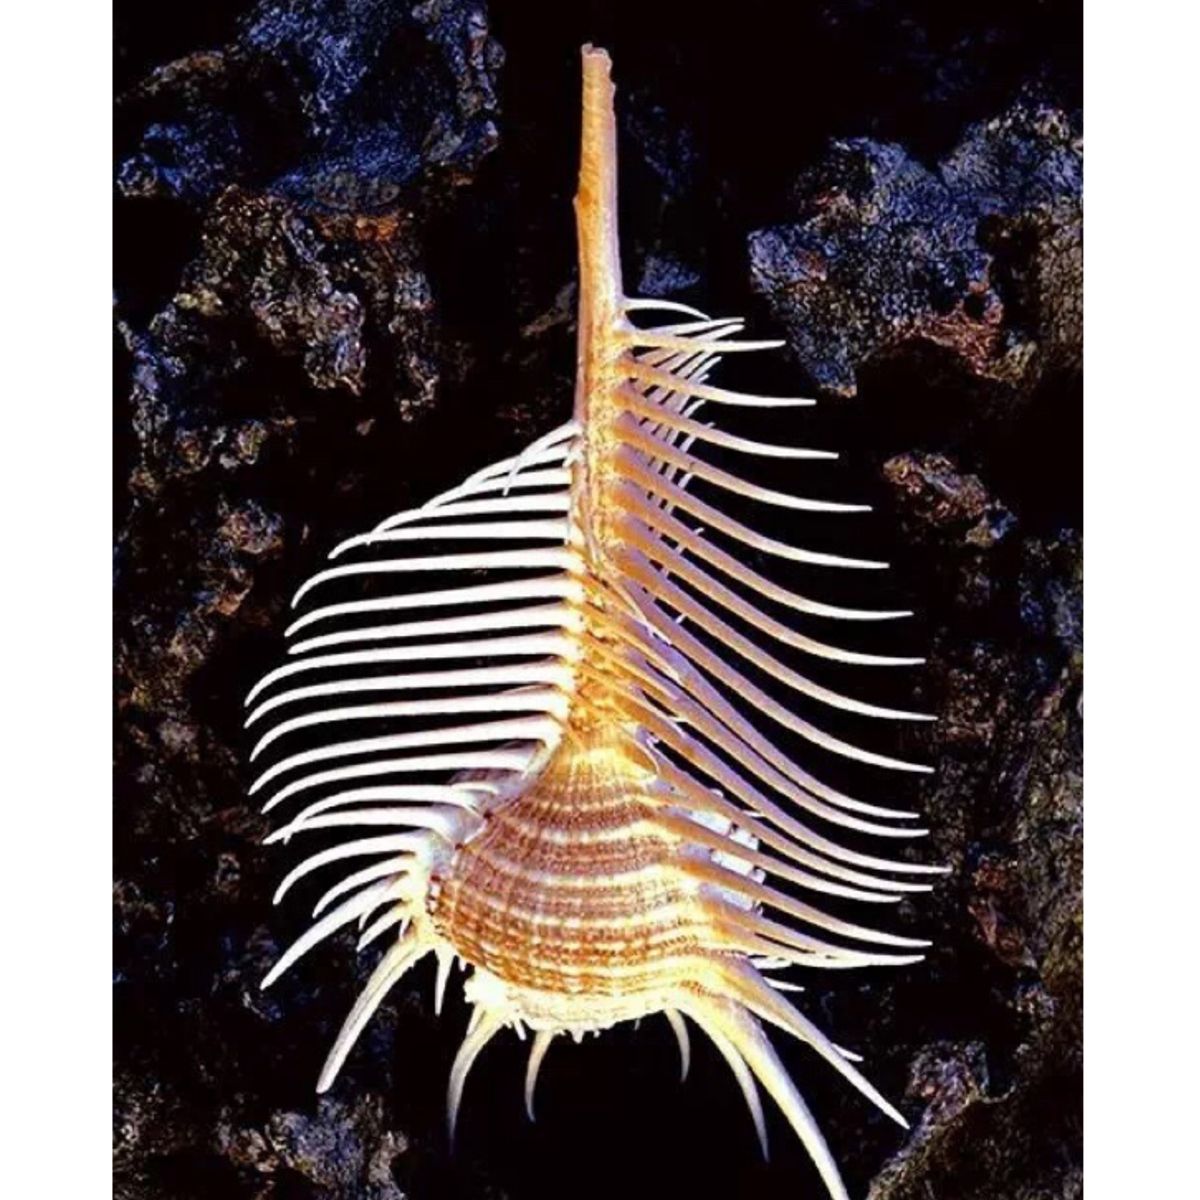 10-12cm-Natural-Murex-Pecten-Shell-Conch-Coral-Sea-Snail-Fish-Tank-Ornament-Home-Decorations-1471004